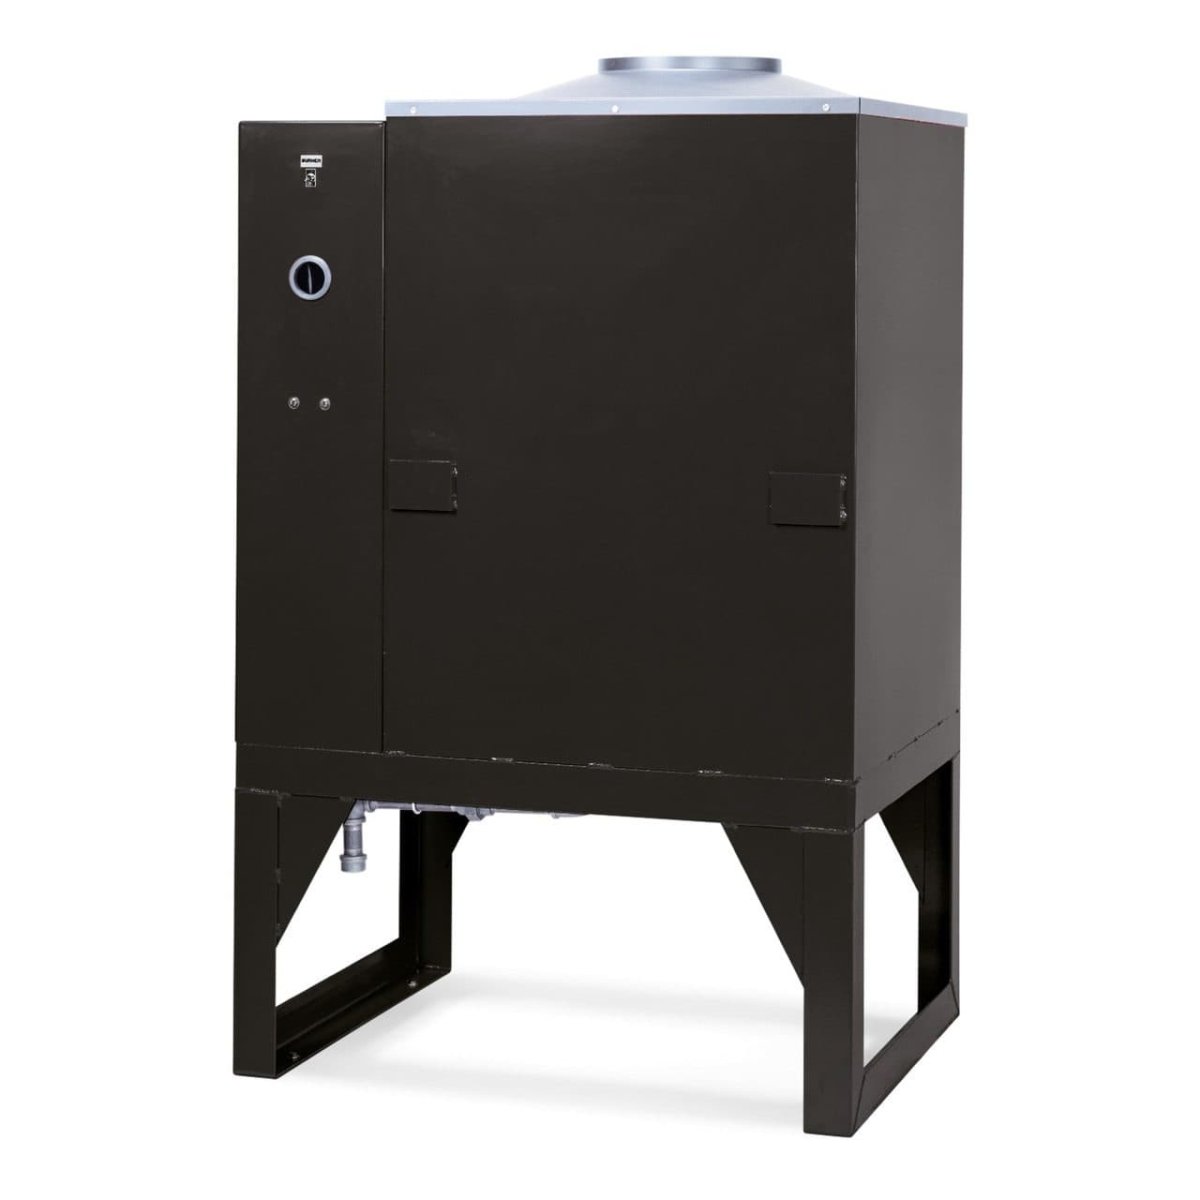 Hot Water Generator 9452 Series - Karcher